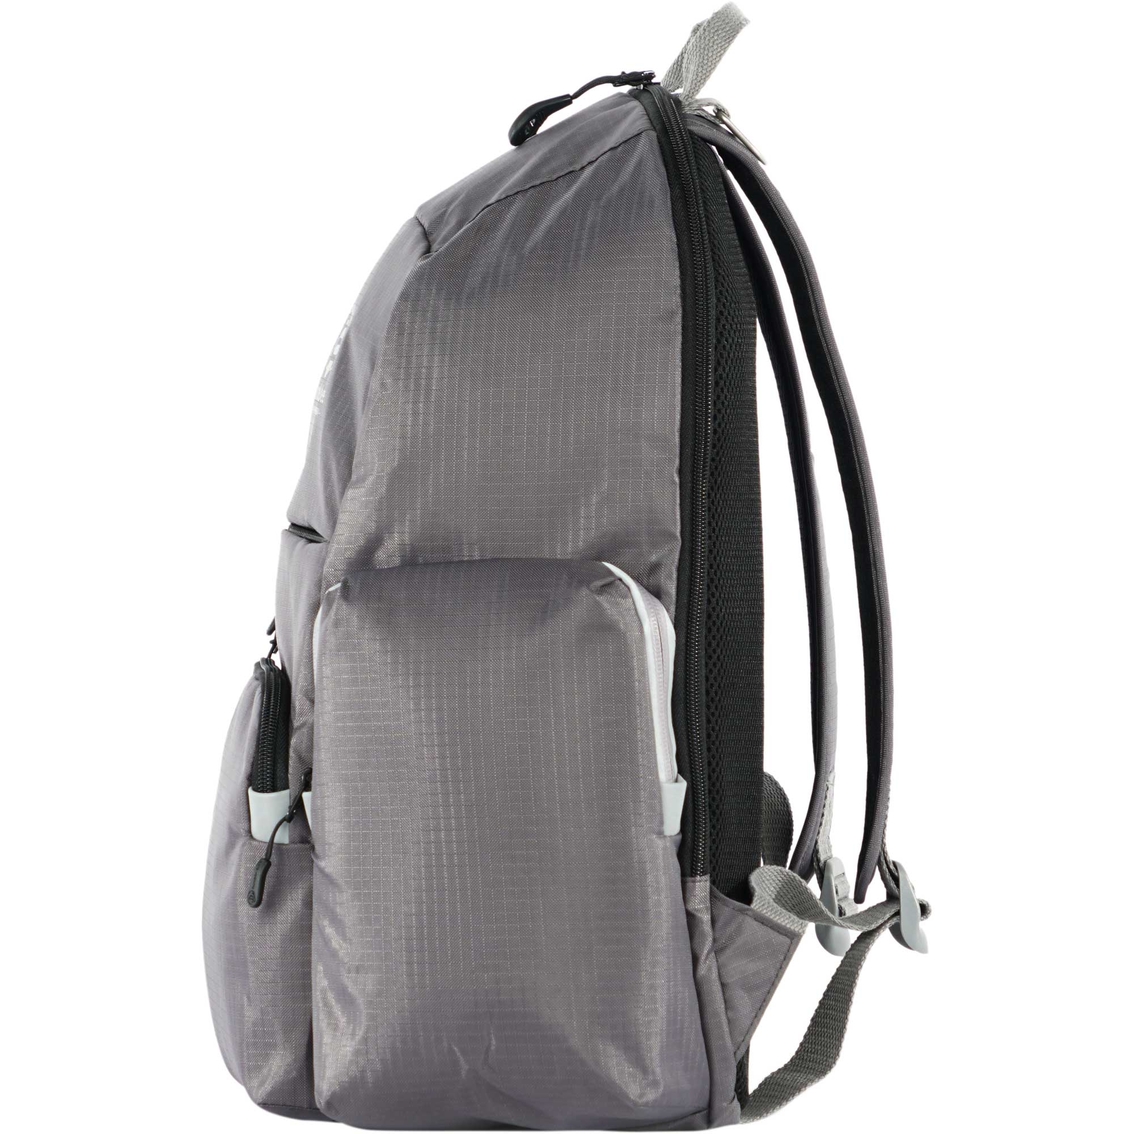 Humble-Bee Free Spirit Diaper Bag Backpack - Image 2 of 8